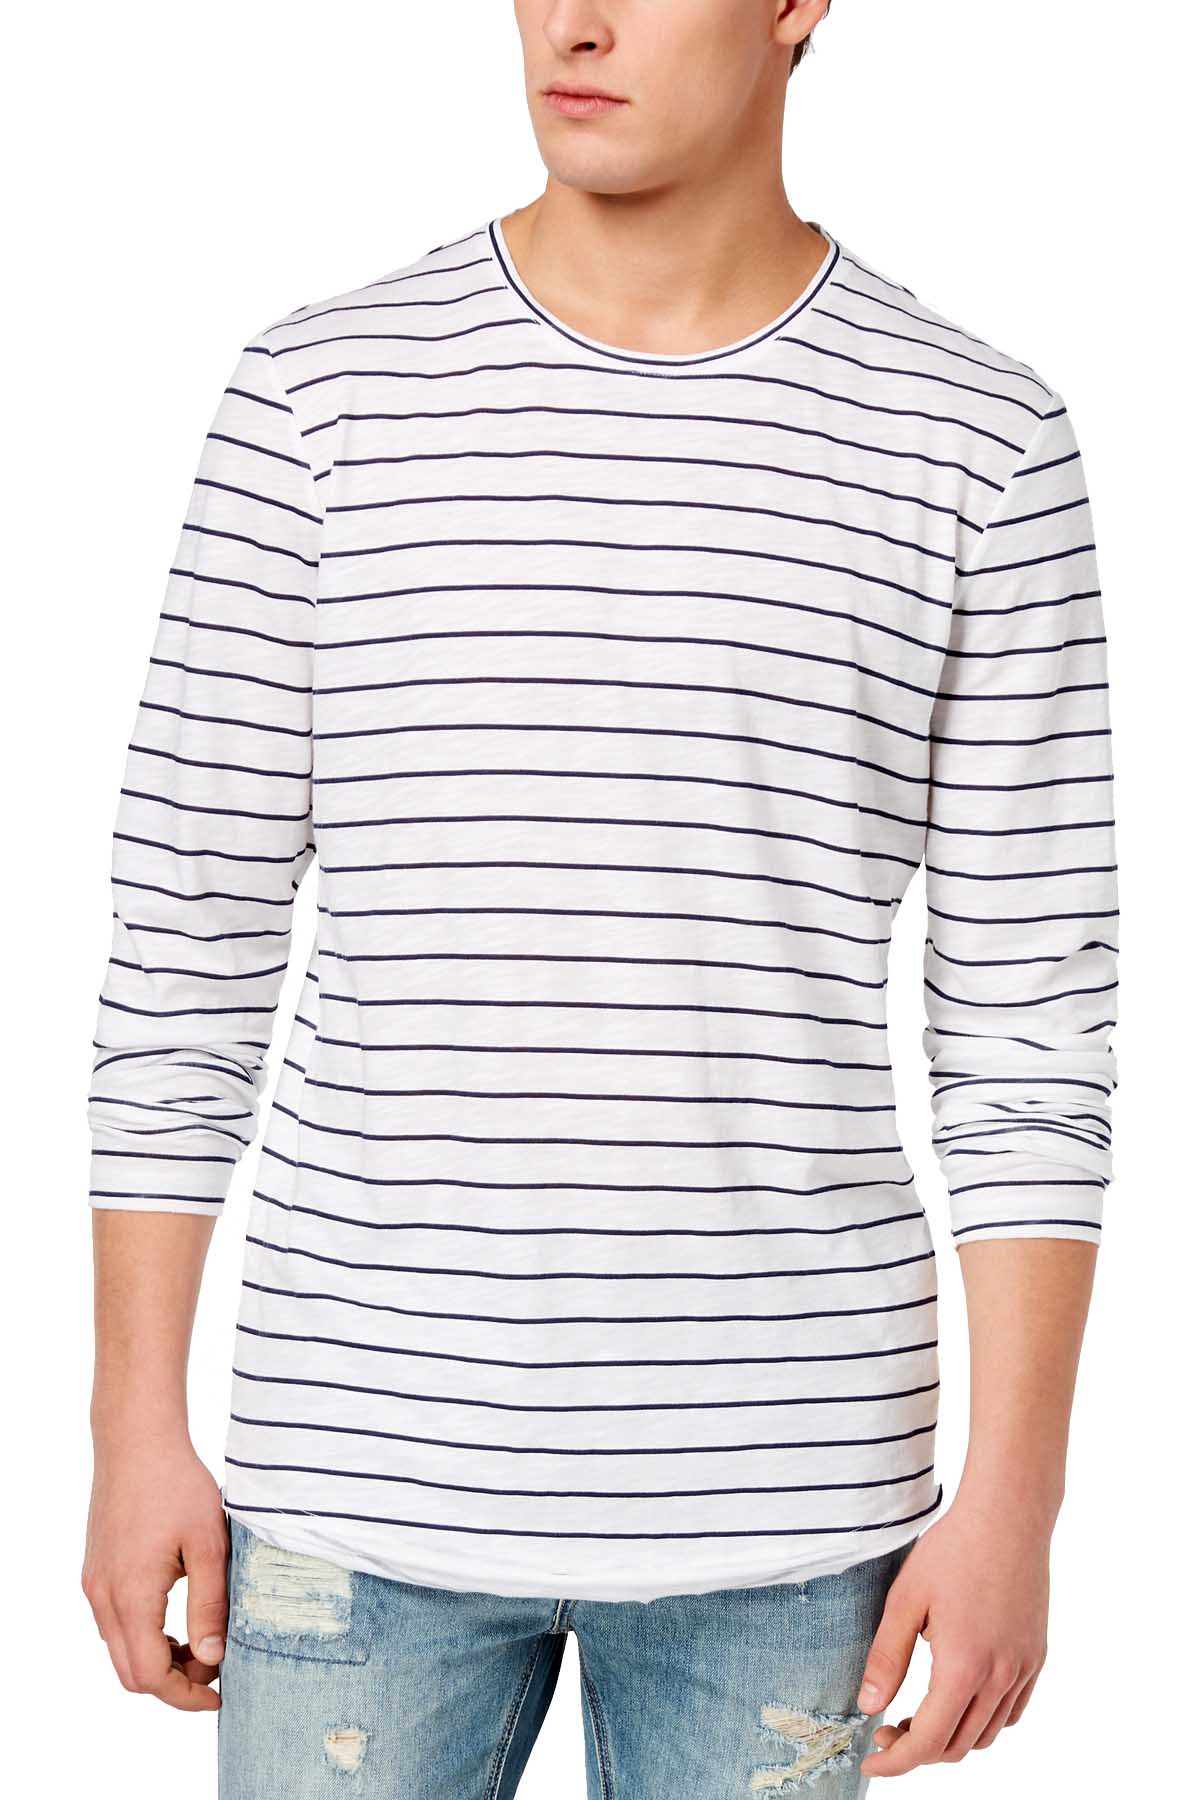 American Rag Admiral Striped Long-Sleeve T-Shirt